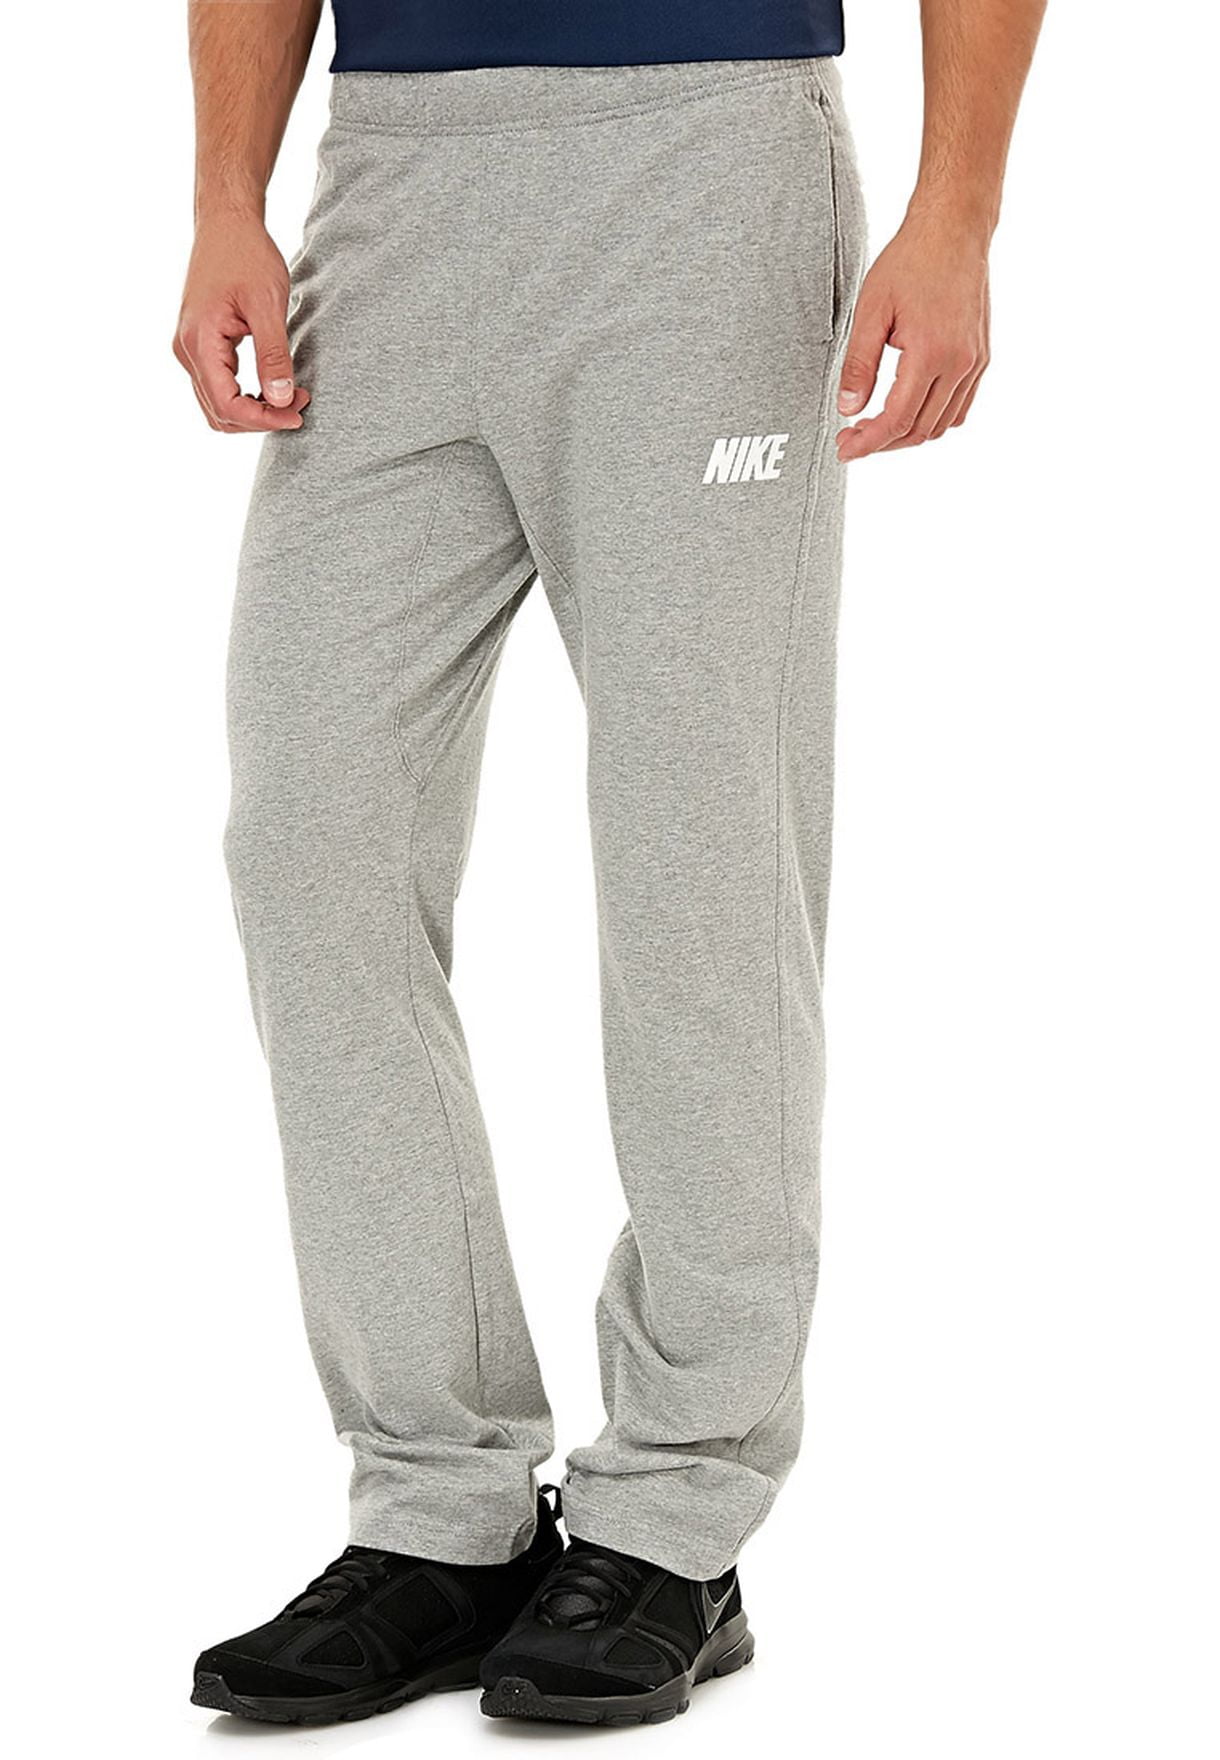 Nike Men's Crusader Grey Pants Size XS - Walmart.com